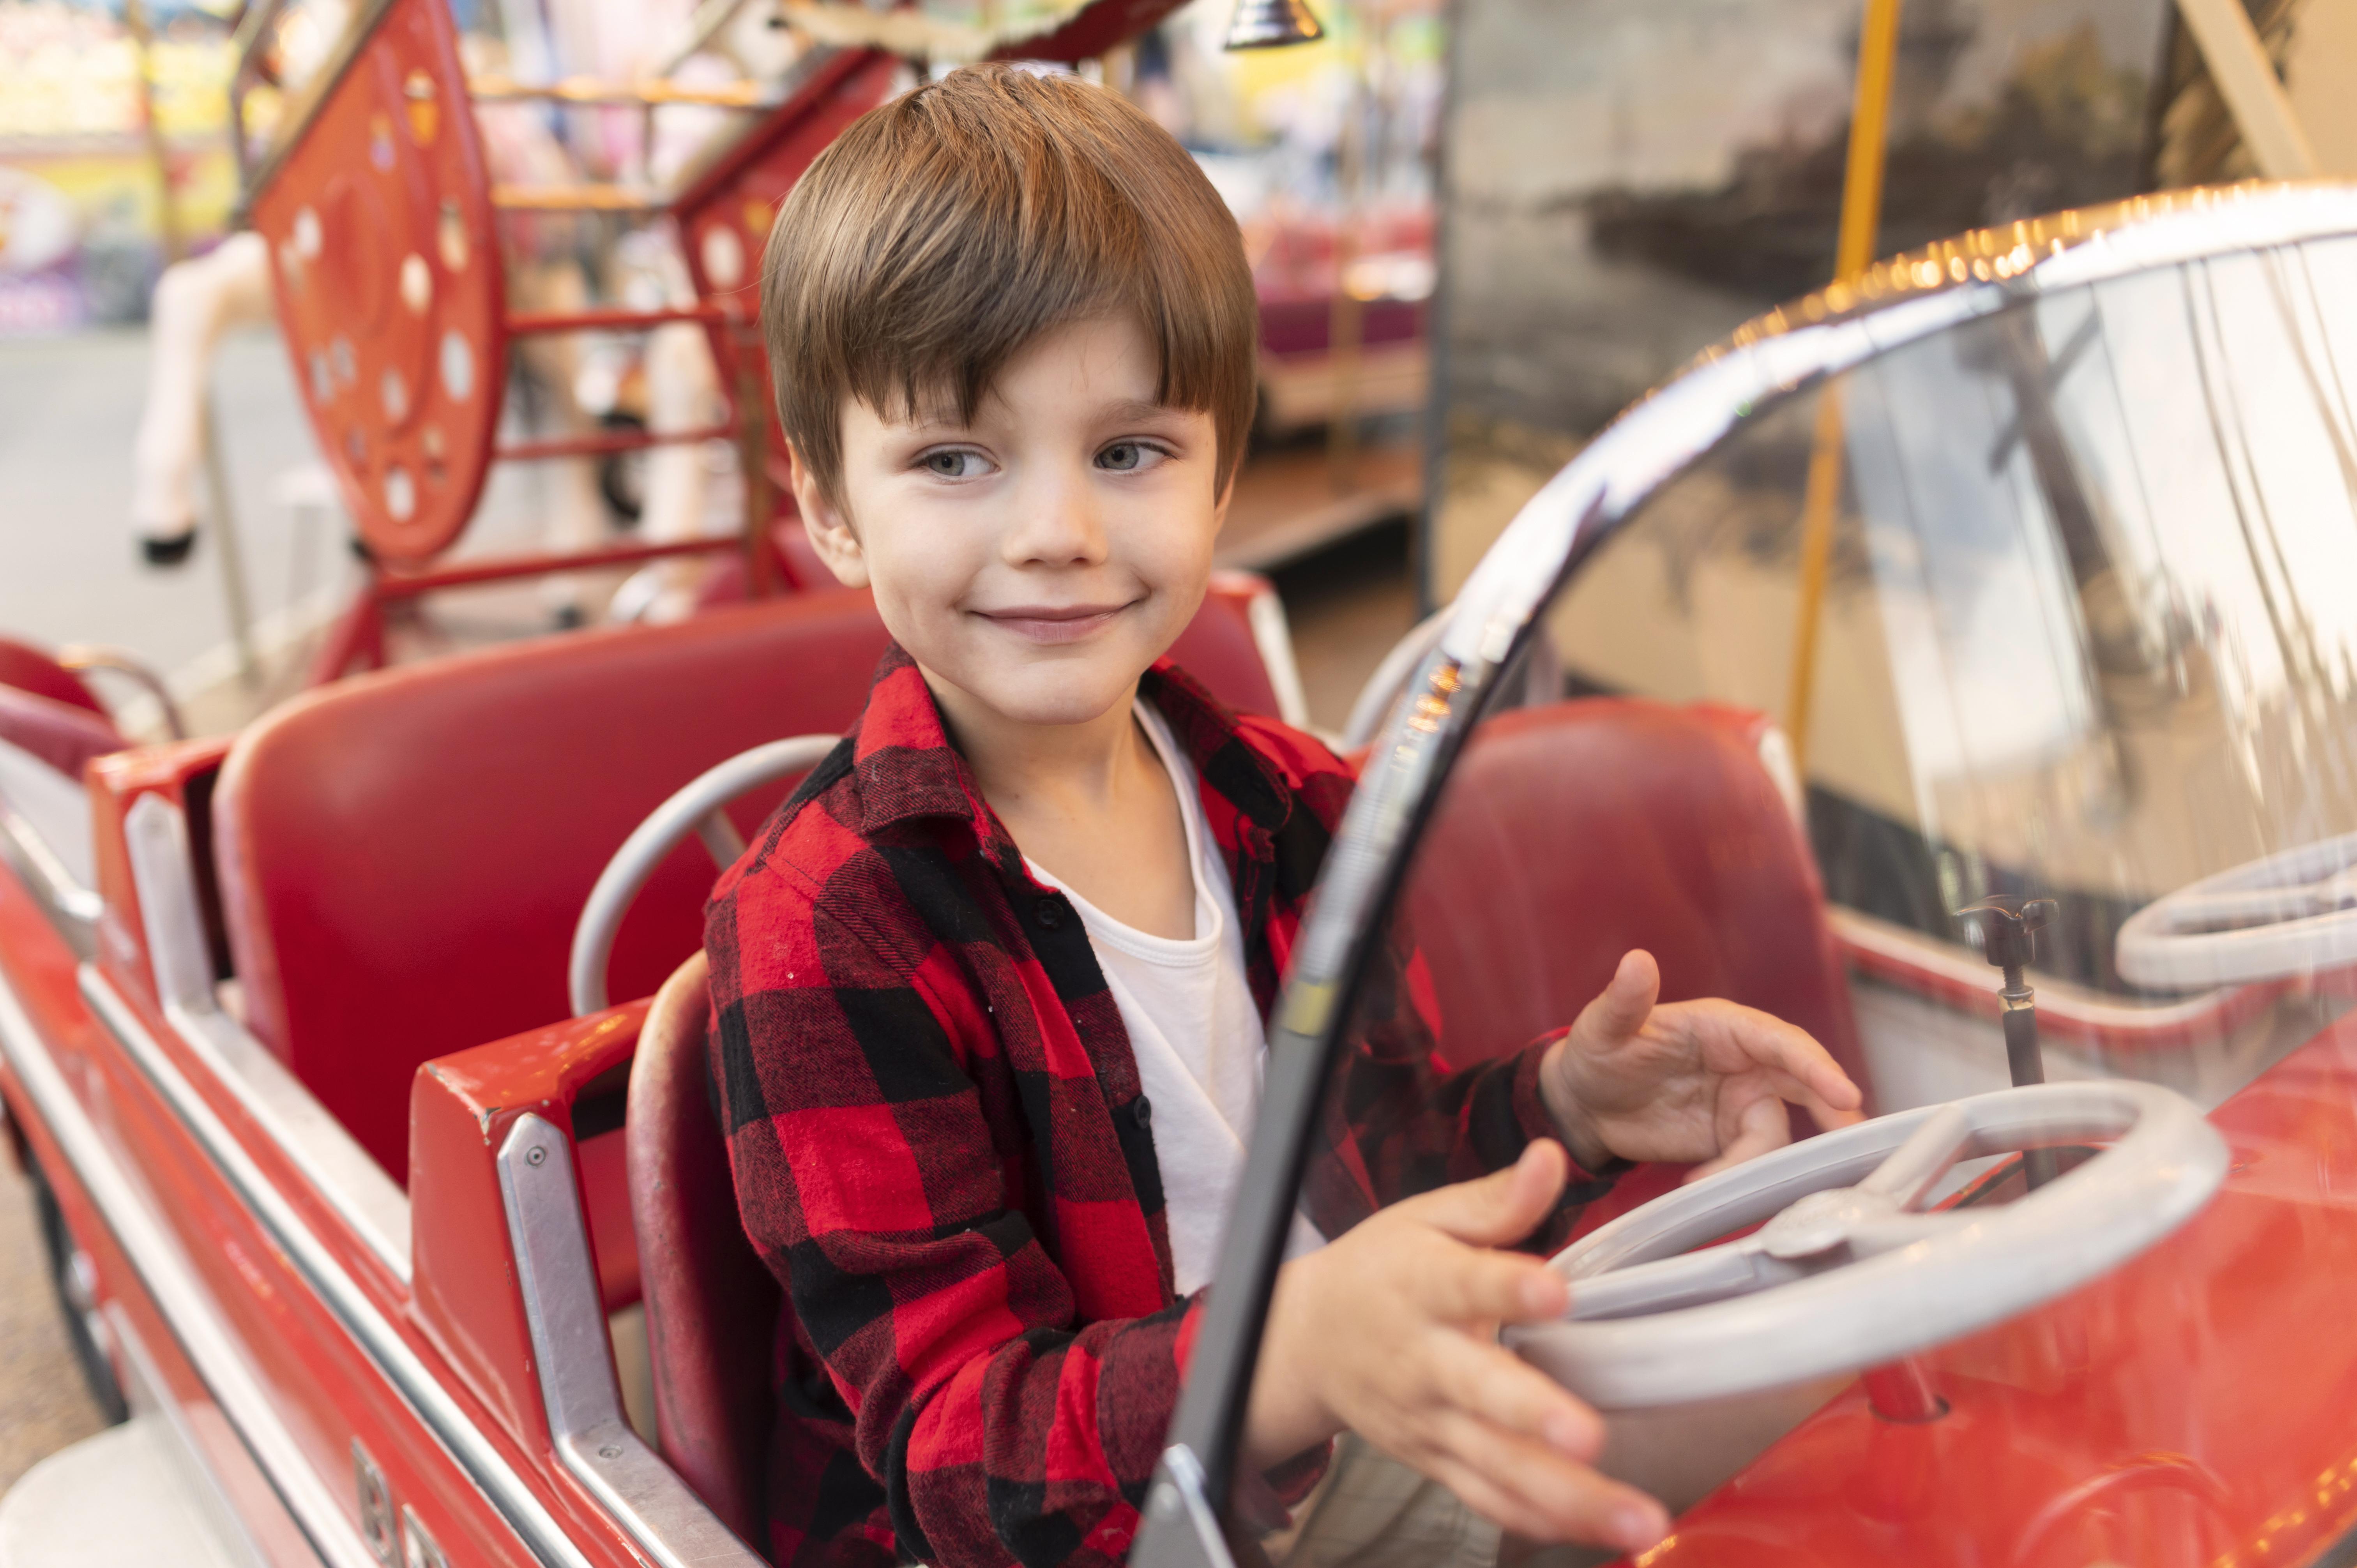 A happy kid at an amusement park | Source: Freepik